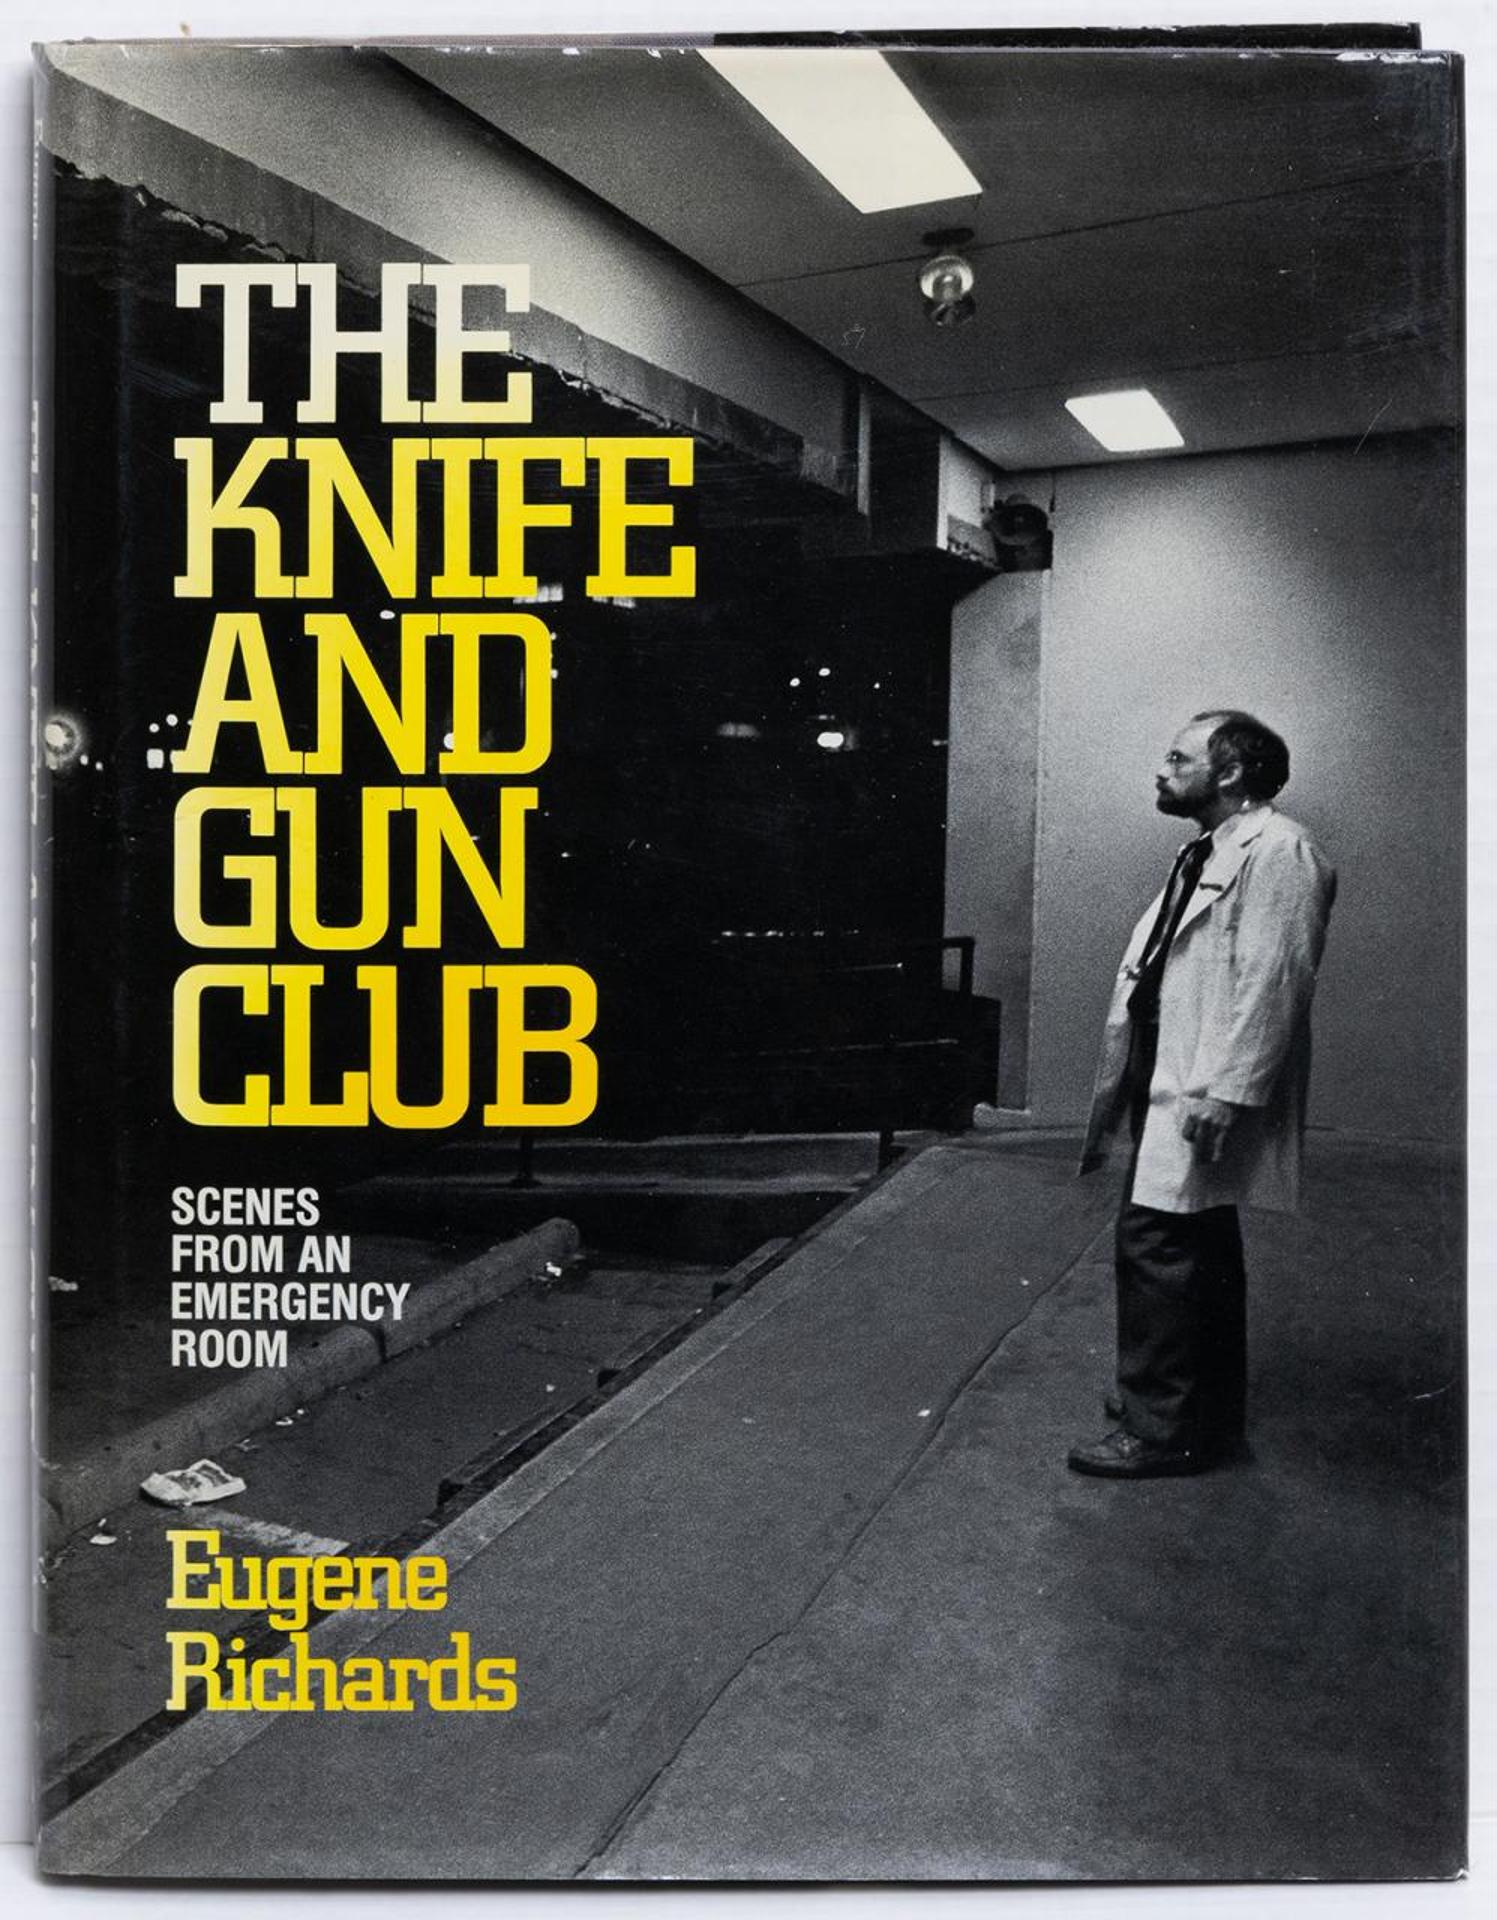 Eugene Richards (1944) - The Knife and Gun Club